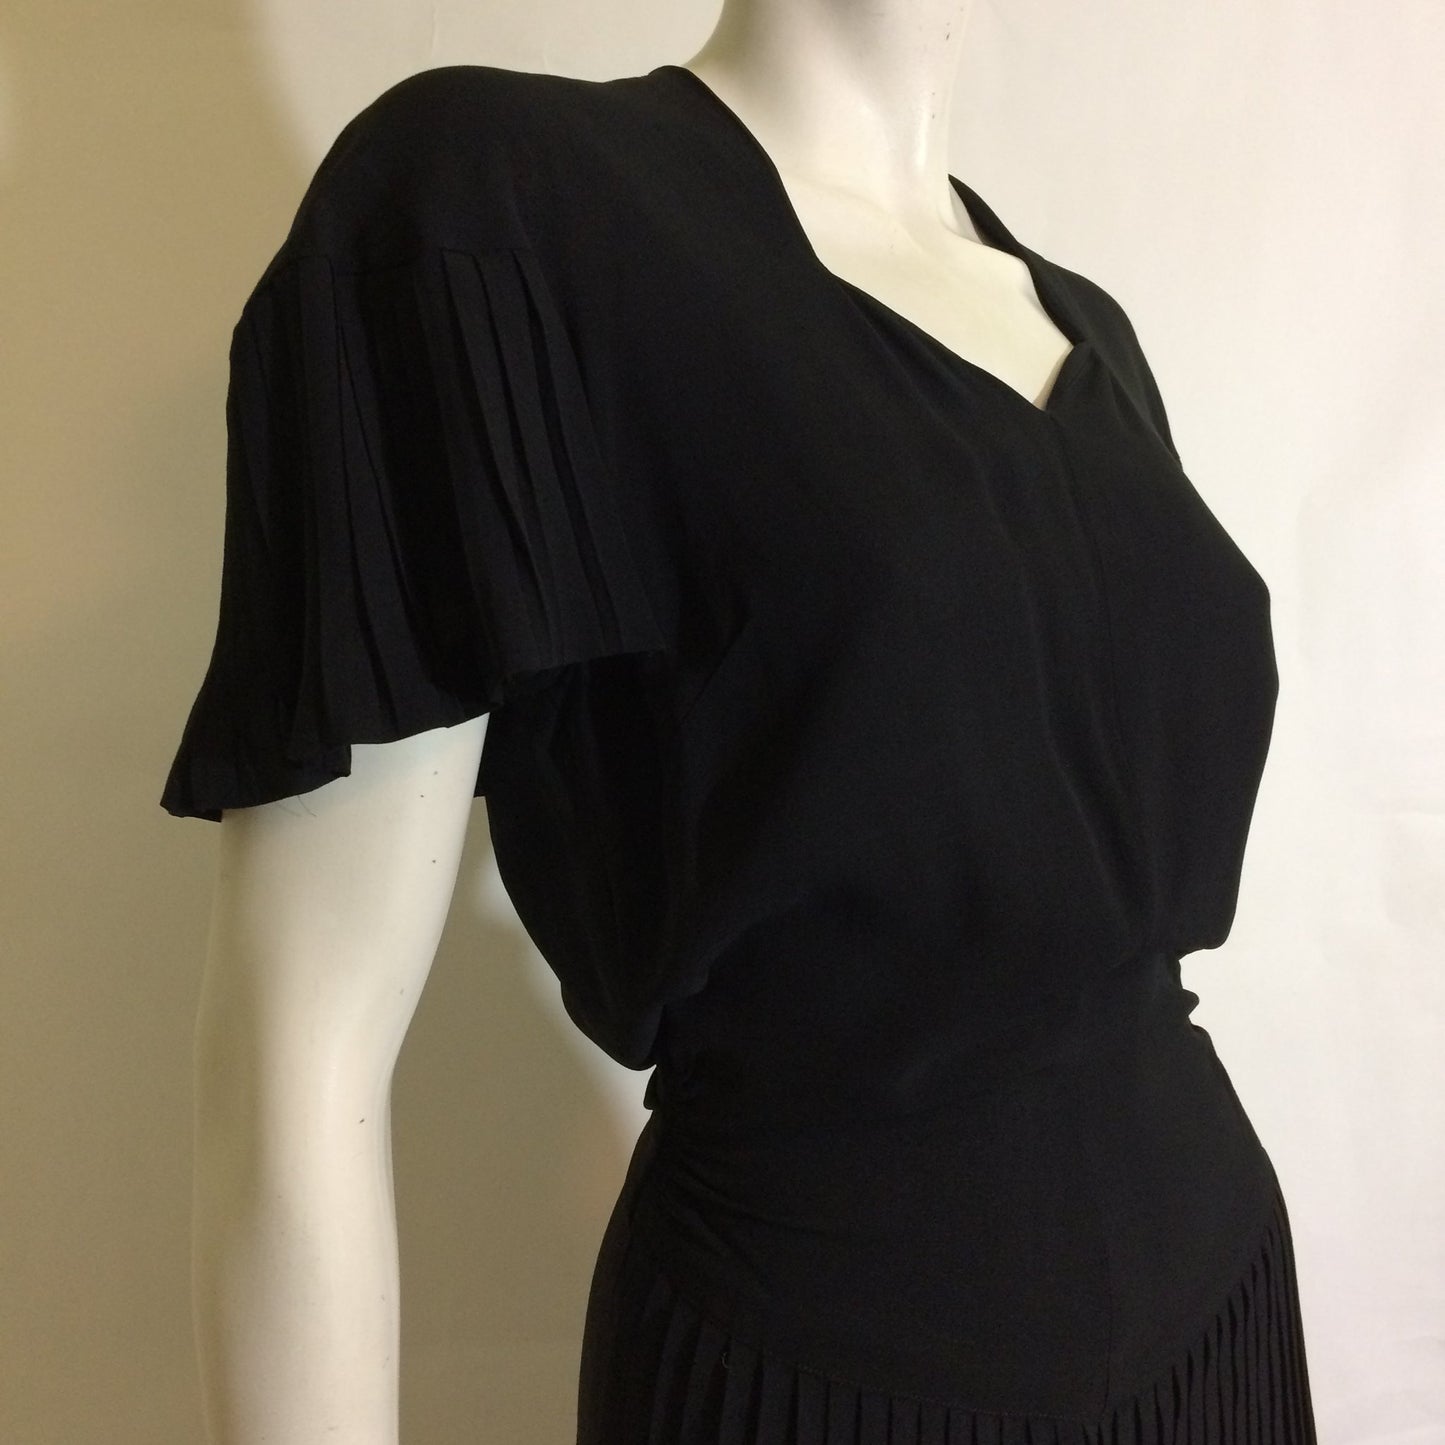 Pretty Pleated Black Tiered Skirt Cocktail Dress circa 1940s